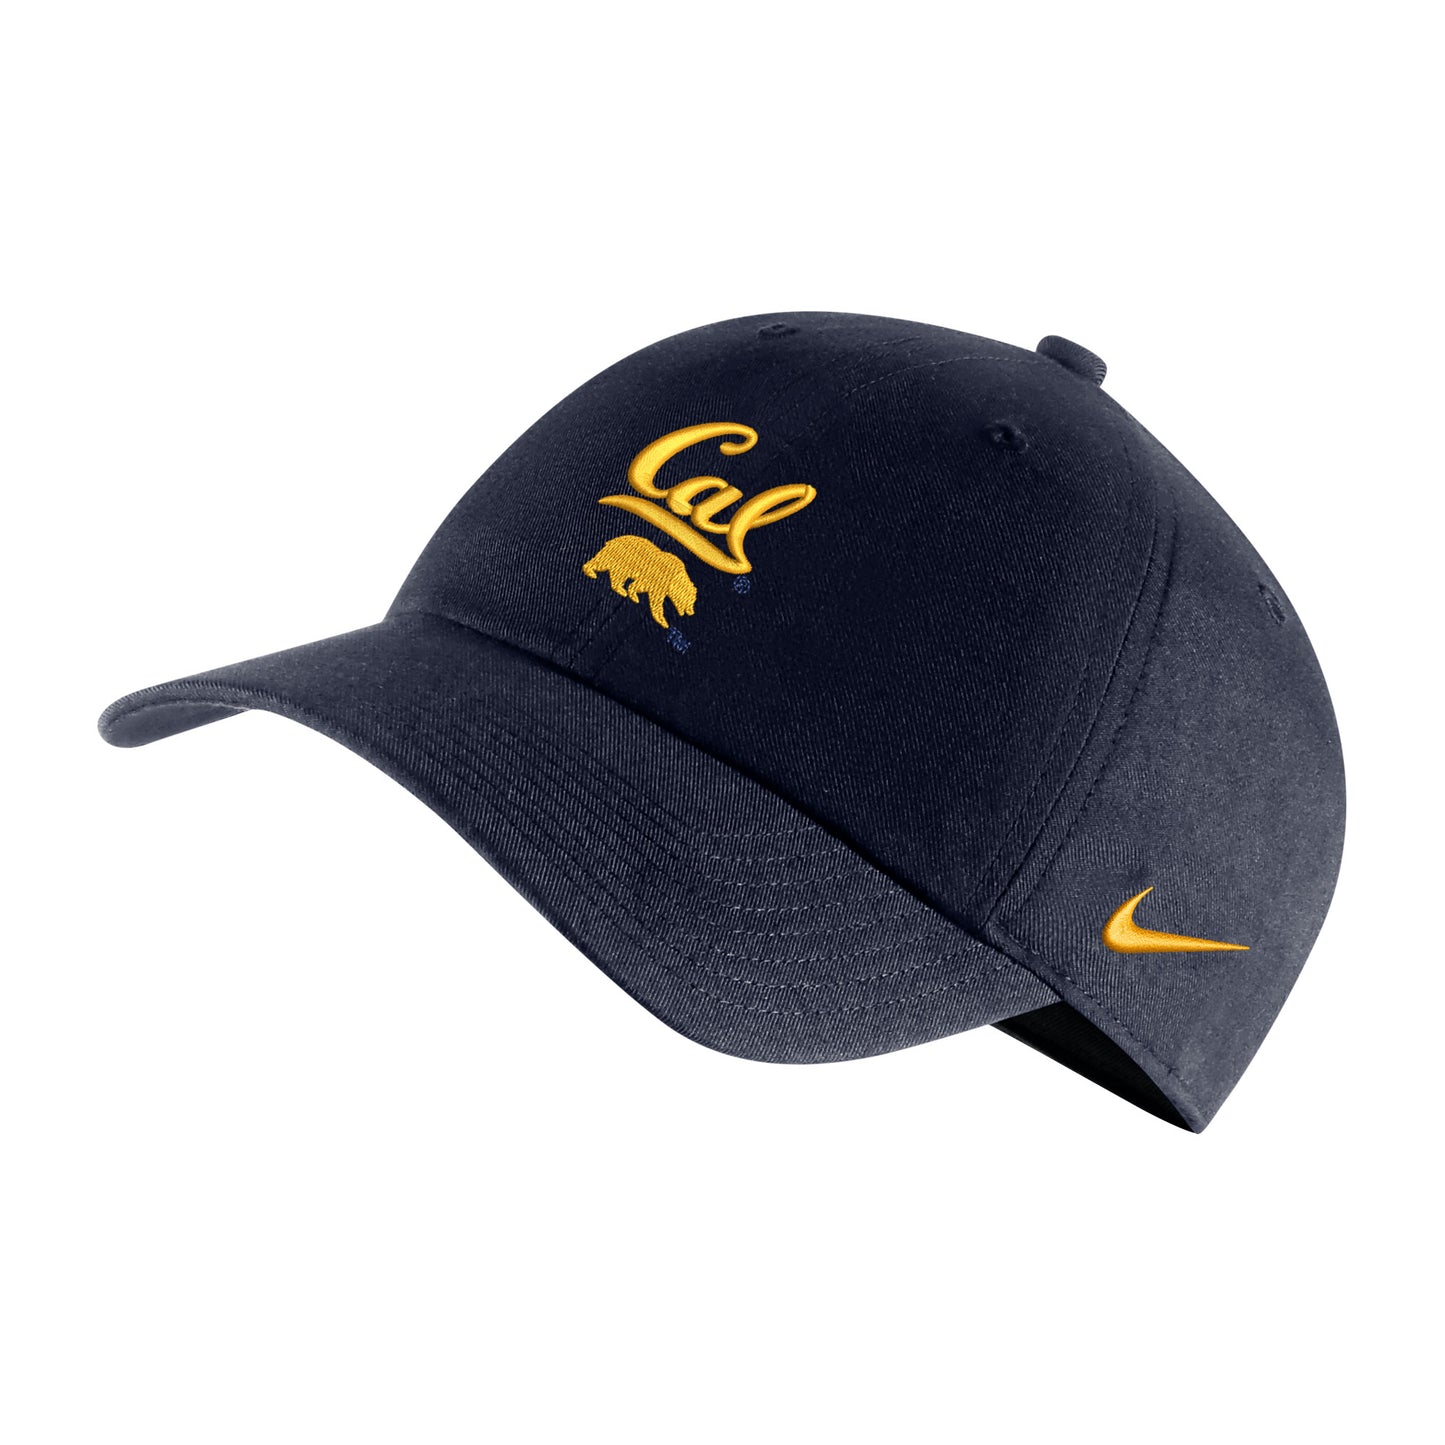 U.C. Berkeley Cal Youth Nike campus hat-Navy-Shop College Wear